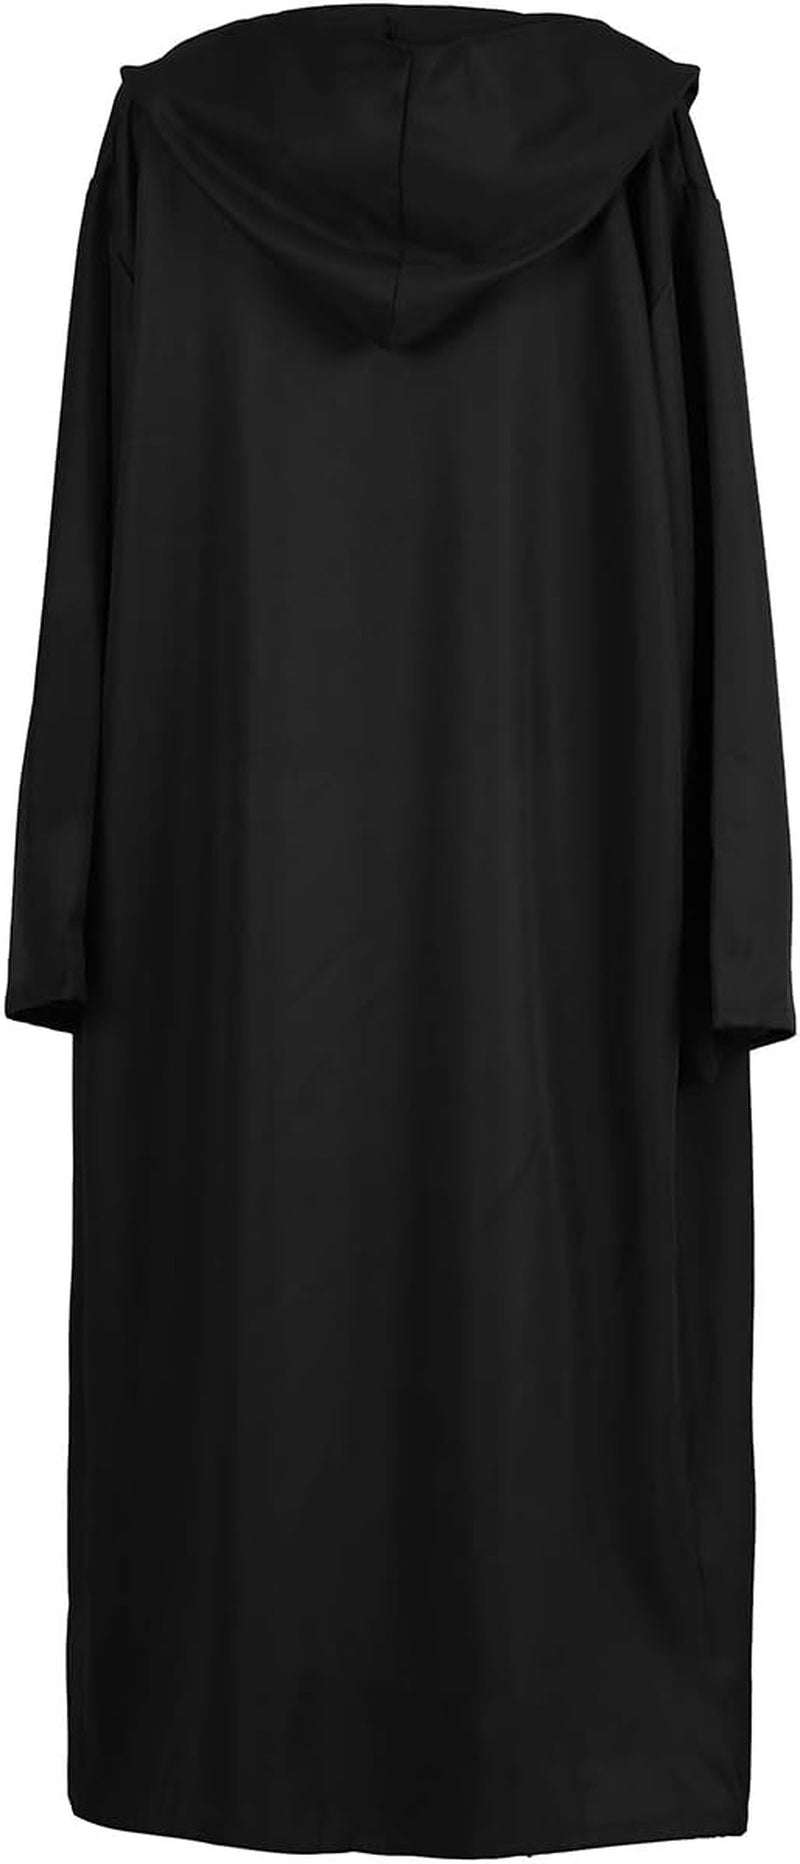 EONPOW Wizard Tunic Hooded Robe Halloween Cloak Cosplay Costumes  EONPOW   